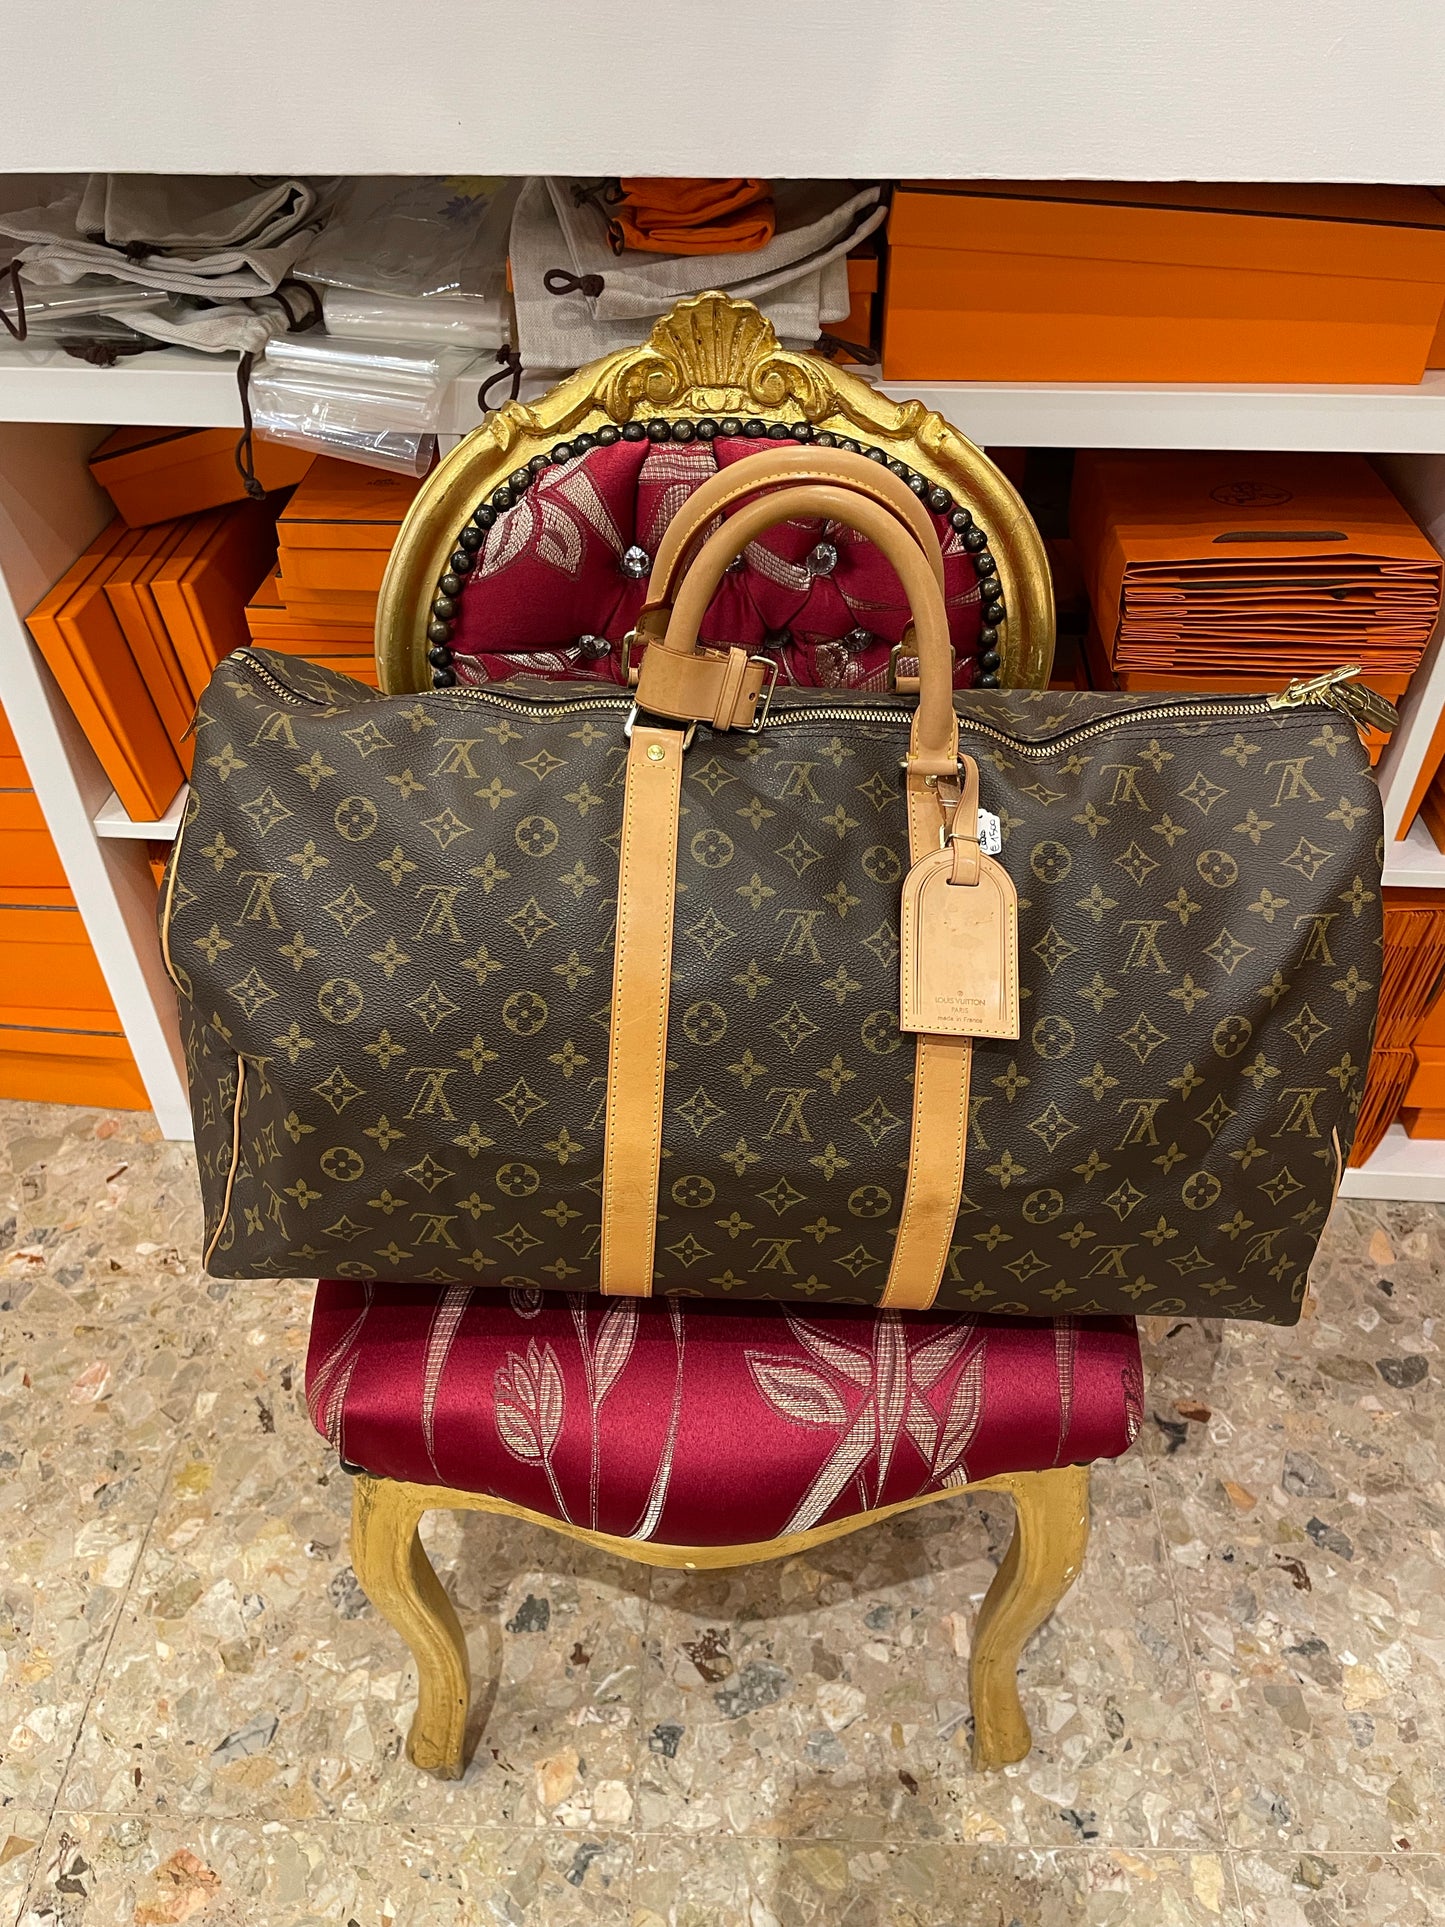 Louis Vuitton Keepall 55 duffle bag